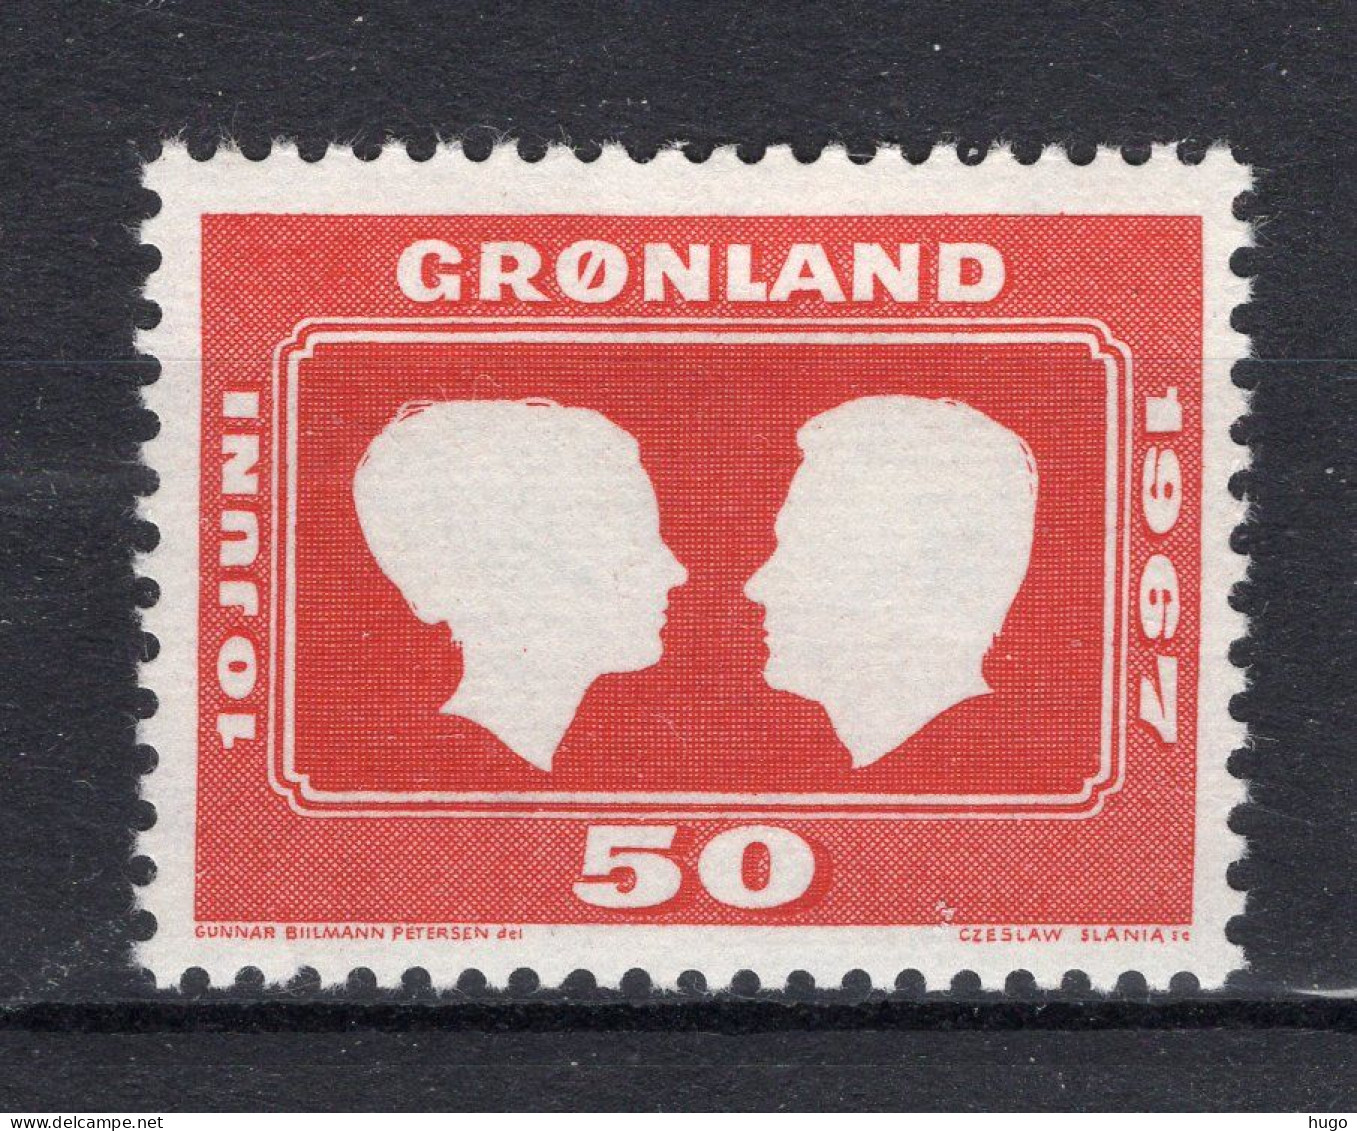 DENEMARKEN-GROENLAND 59 MNH 1967 -1 - Ongebruikt